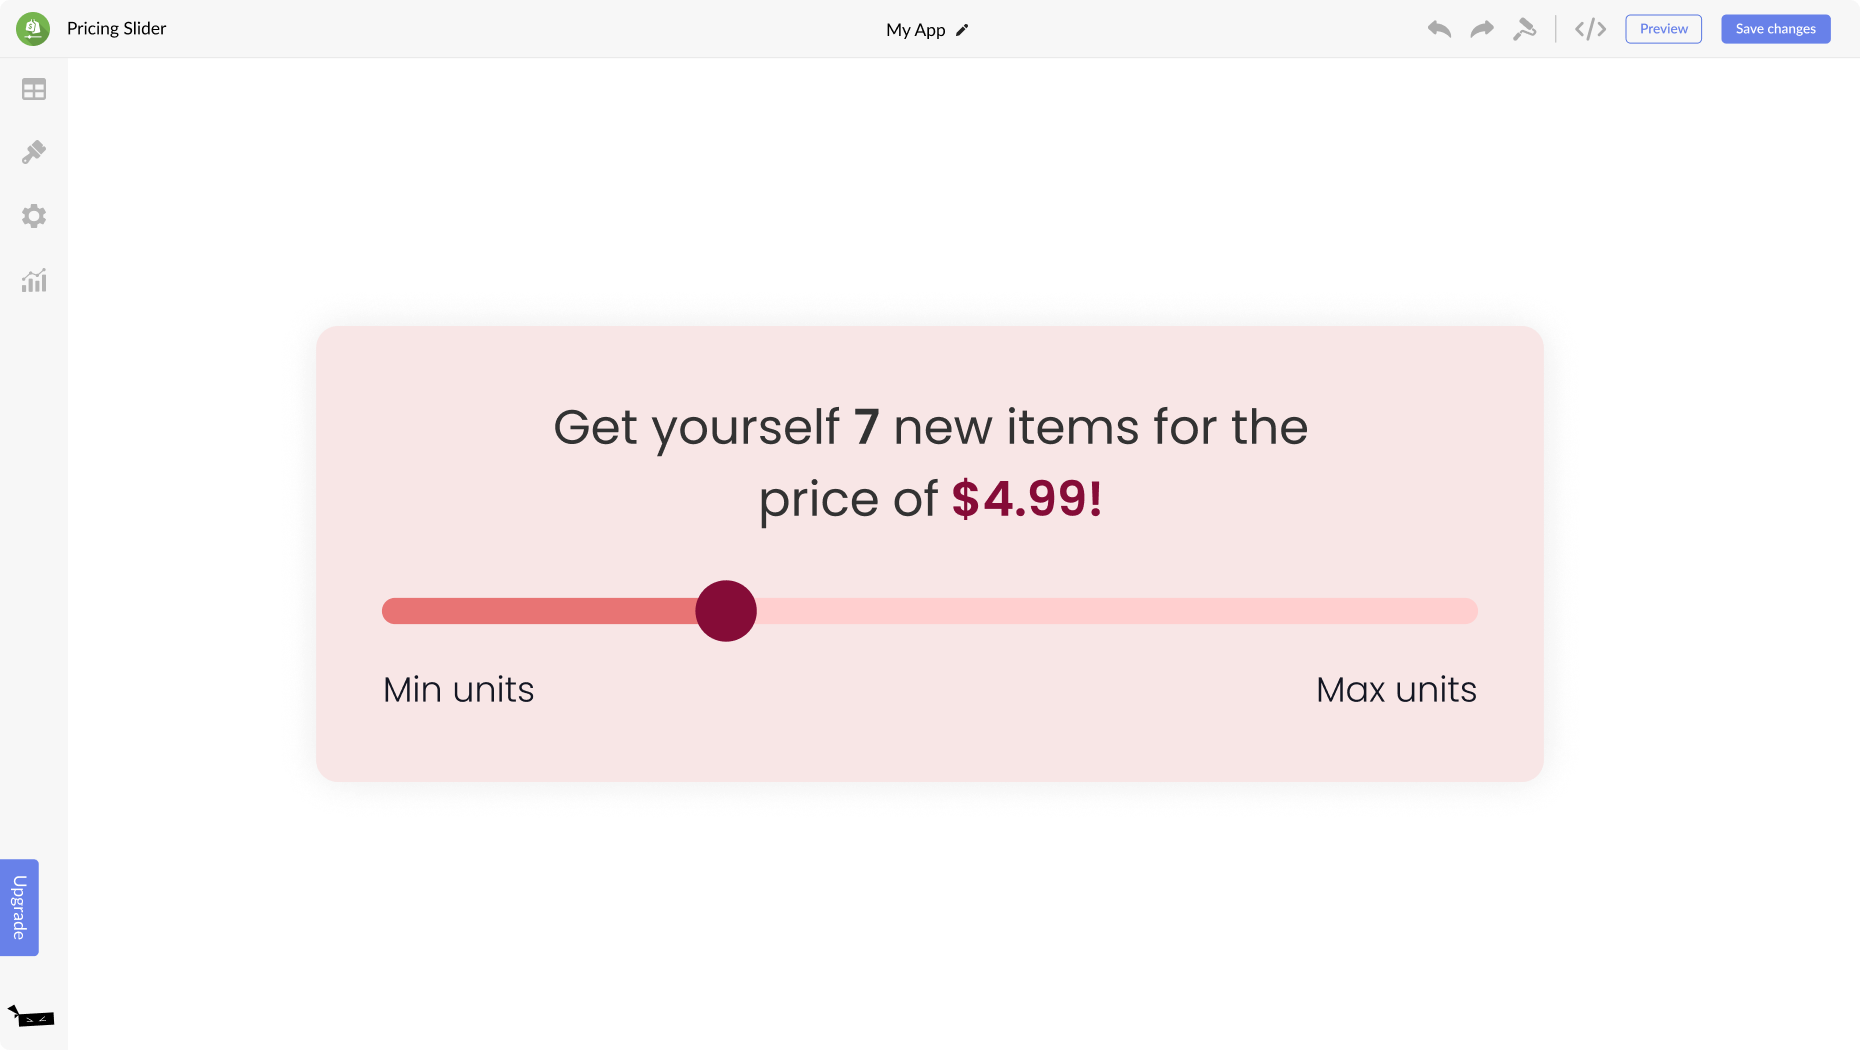 Pricing Slider for Joomla